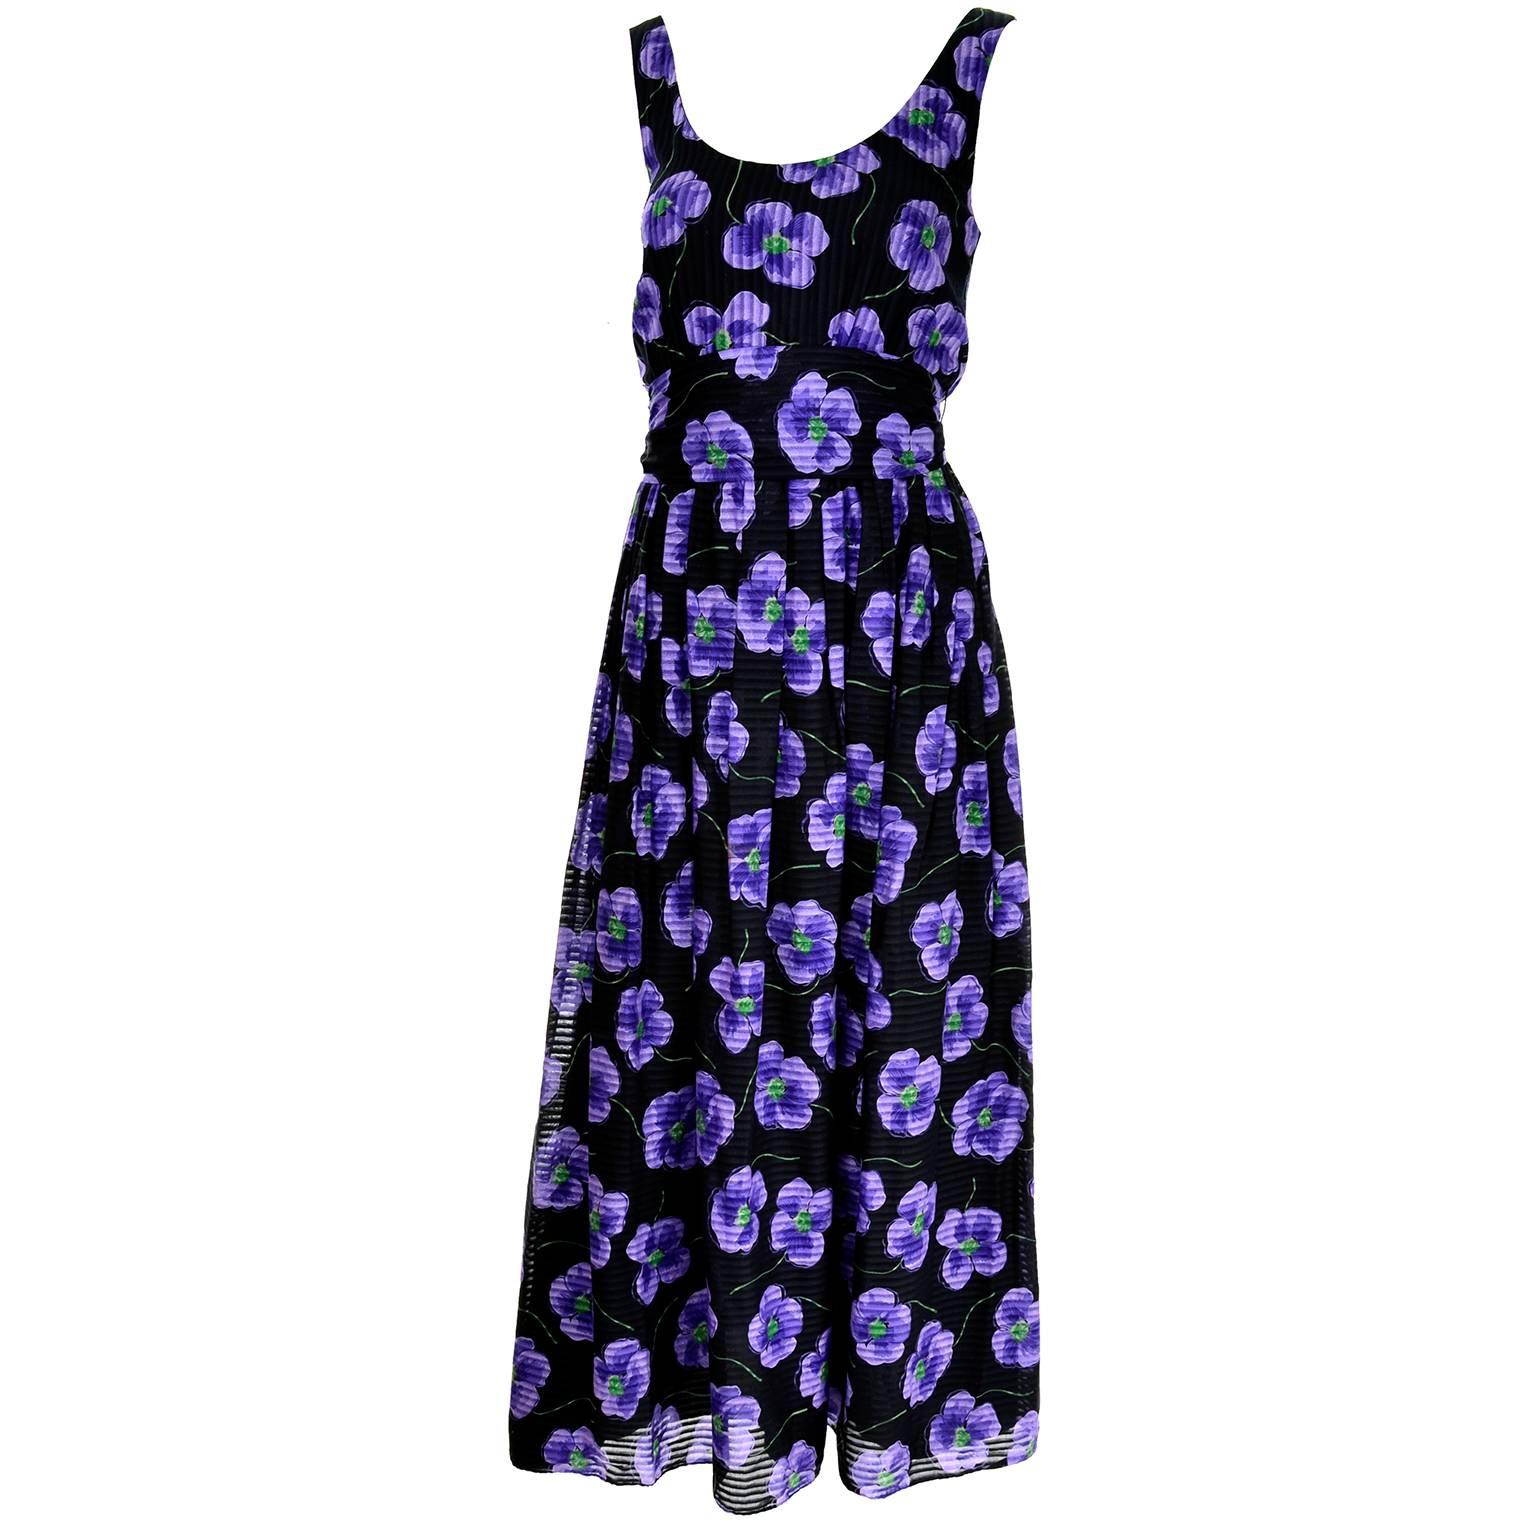 Anthony Muto Vintage Purple & Black Floral Dress Size 4